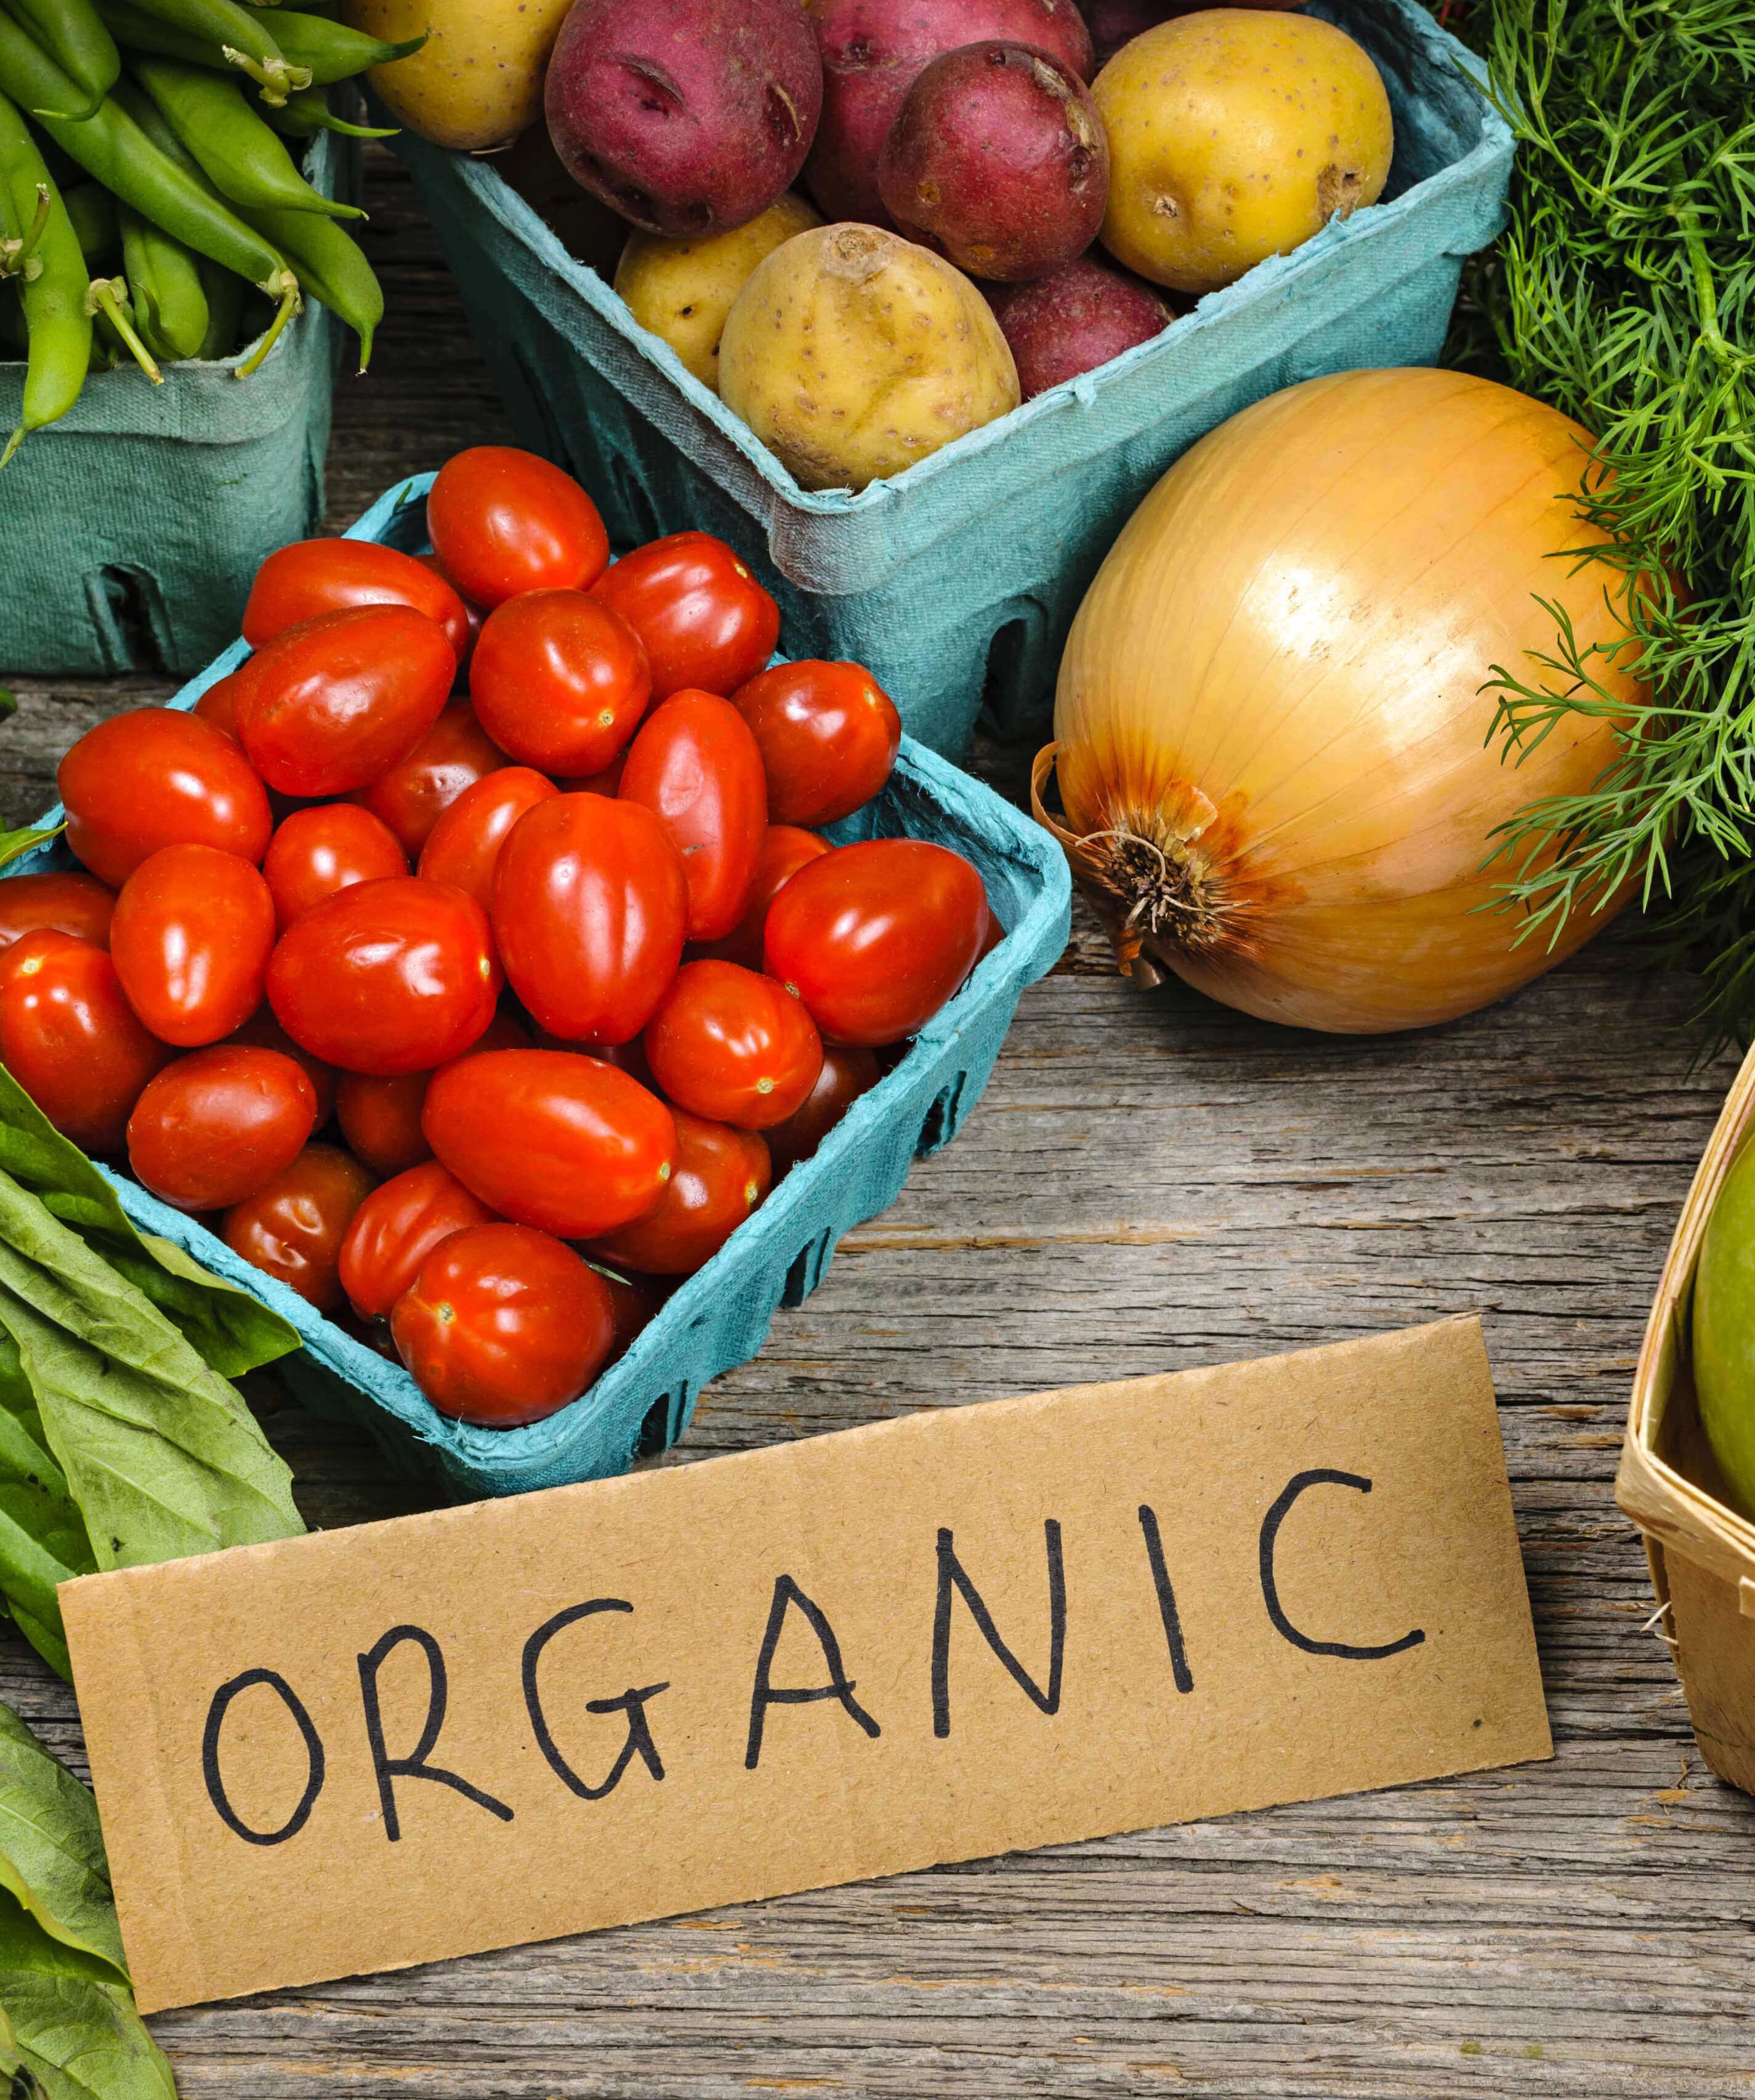 The Organic Choice